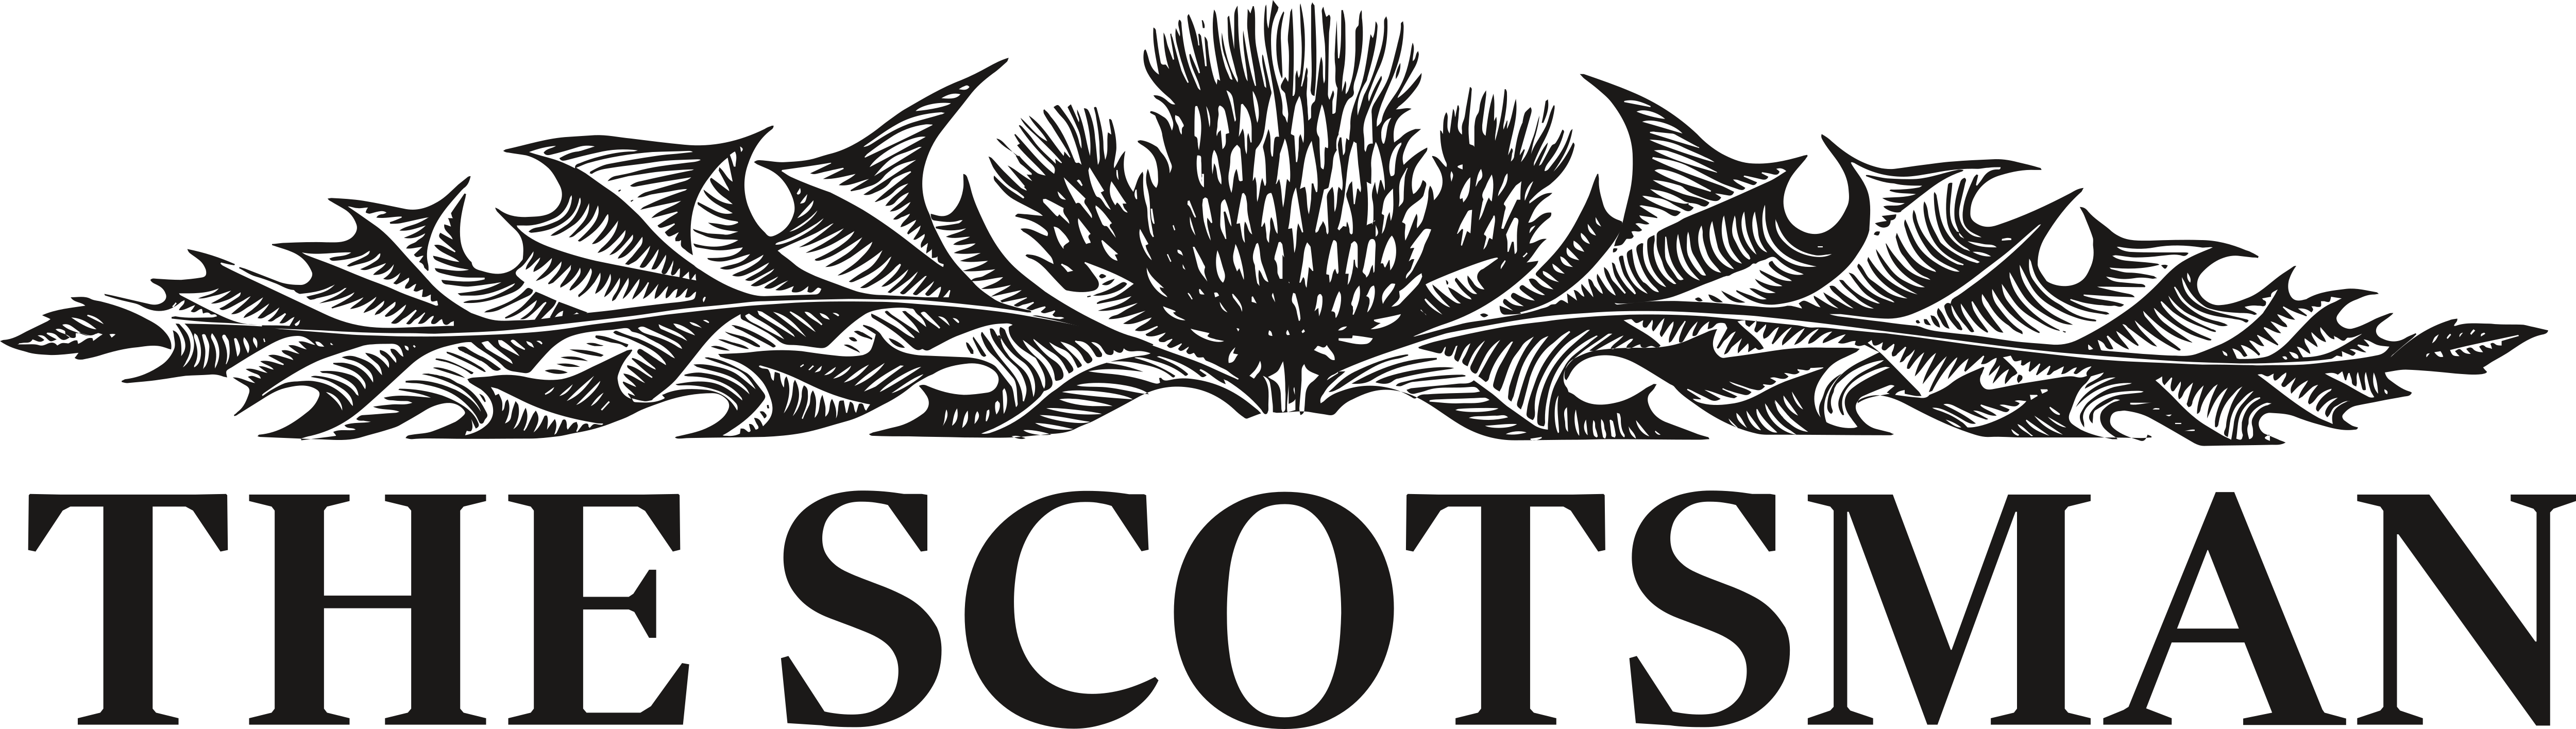 The Scotsman – Logos Download